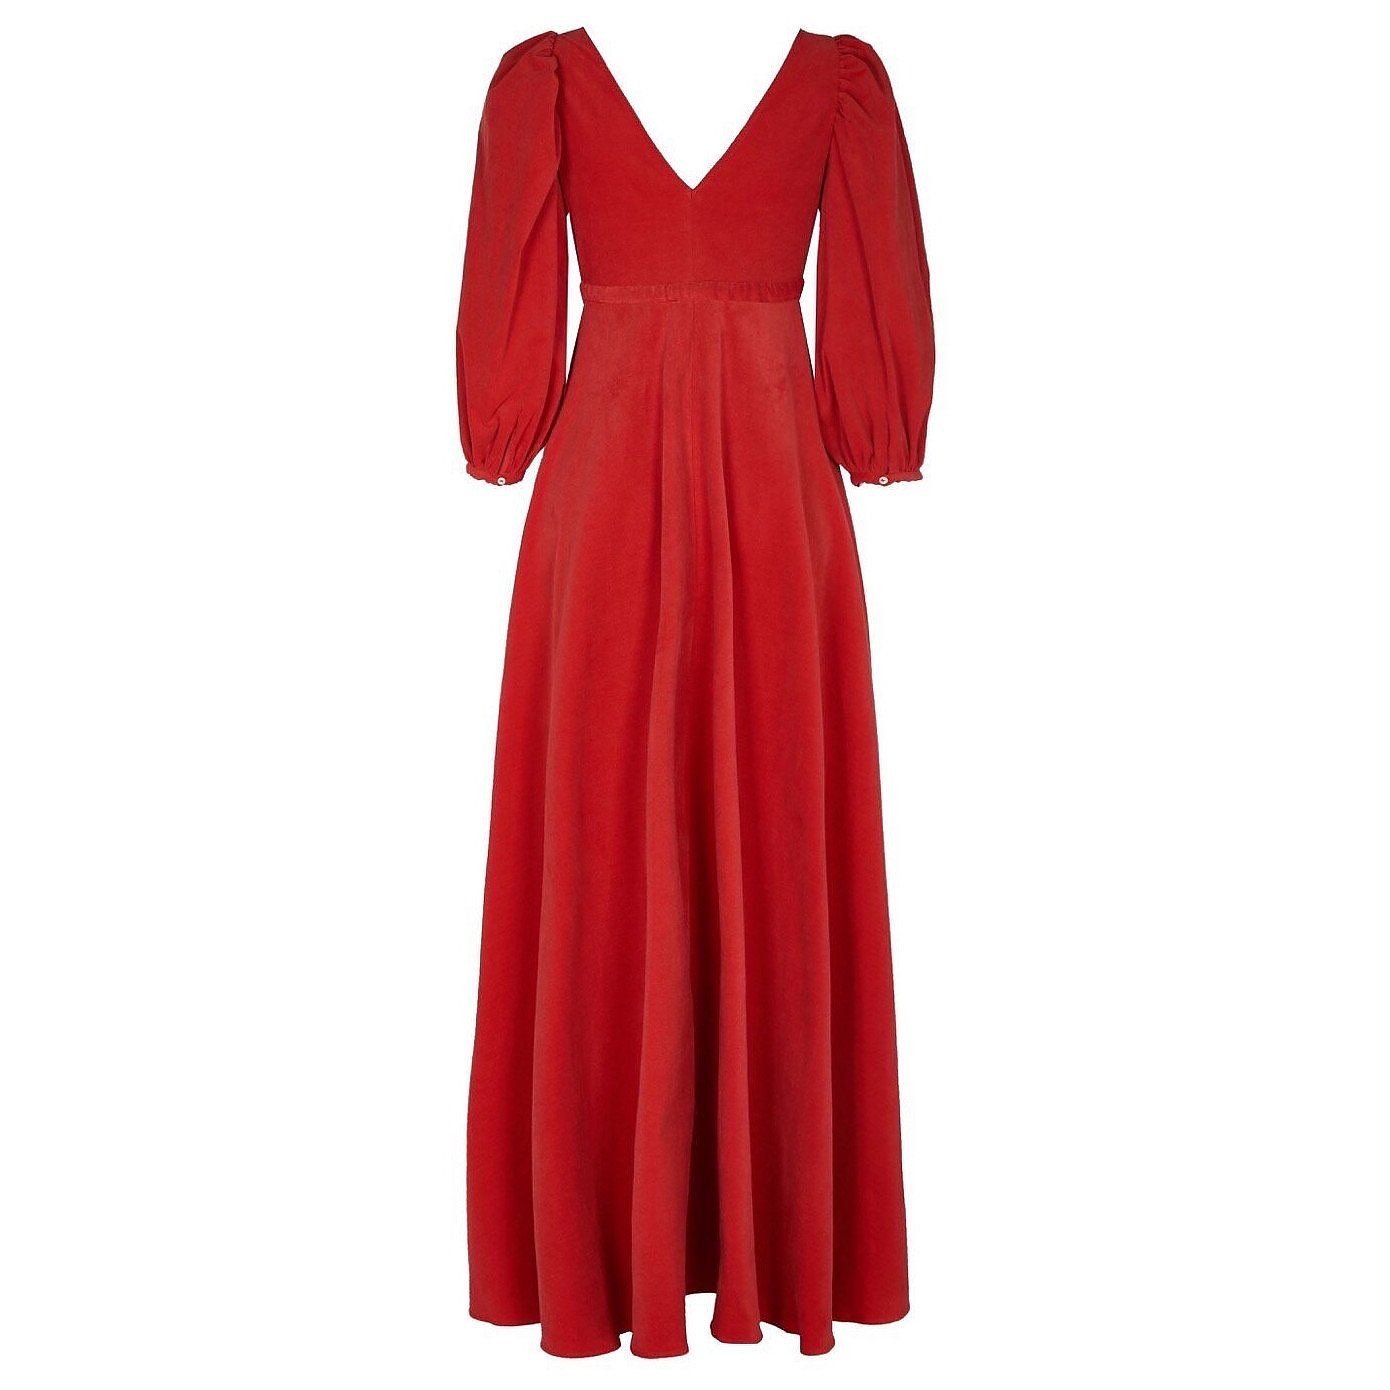 Damselfly London Aria Cord Dress